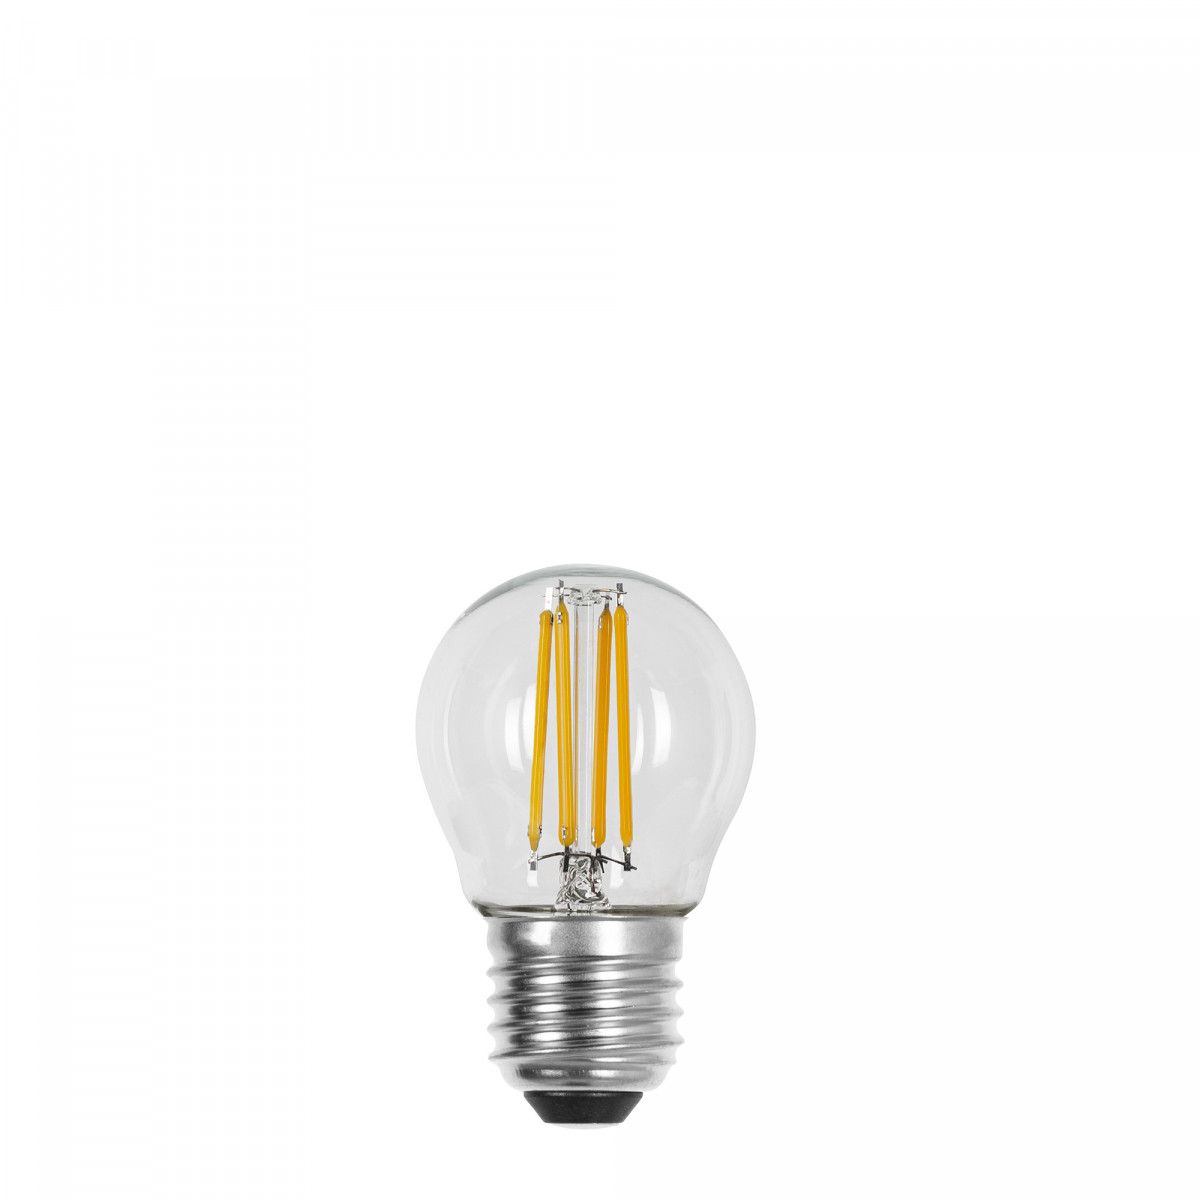 Light bulb LED mini 4w